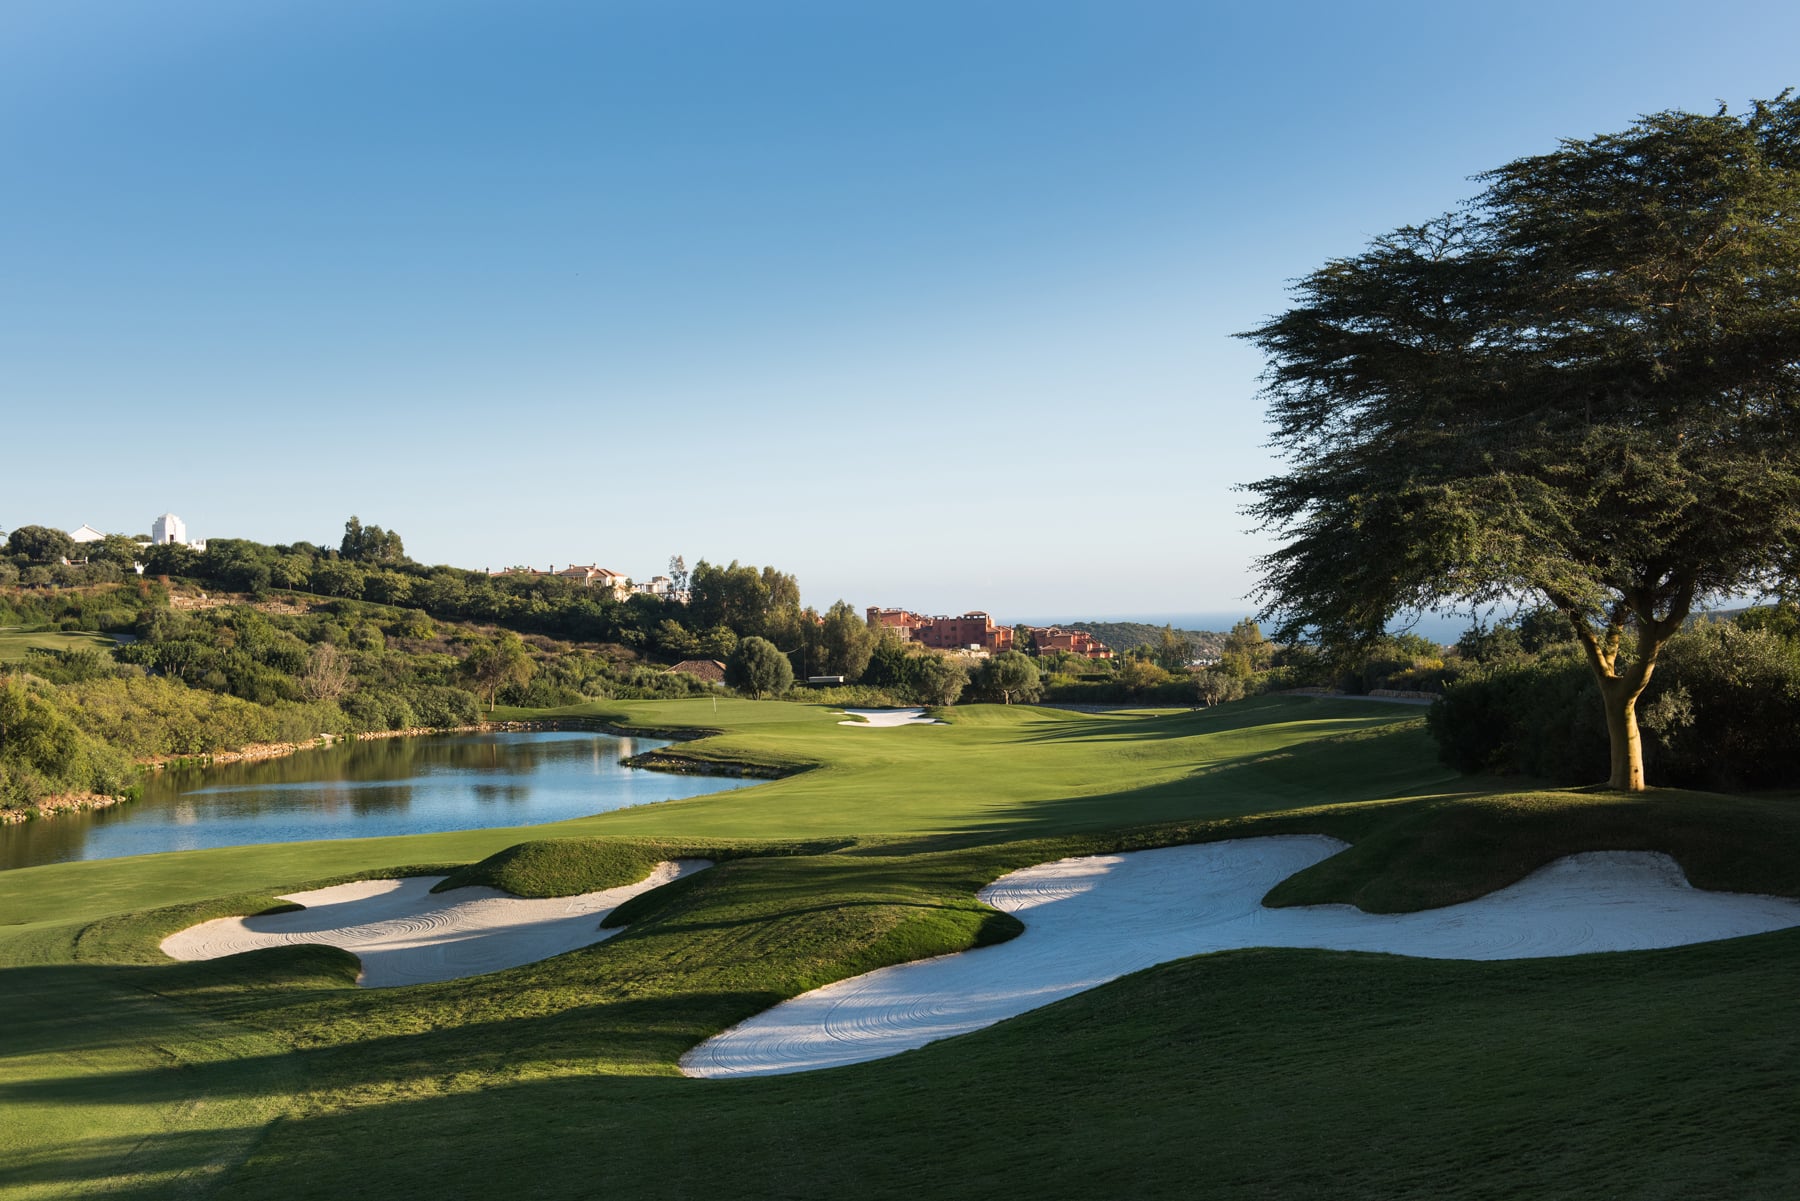 View of the 3rd hole on the golf course, Finca Cortesin, Casares, Malaga, Spain